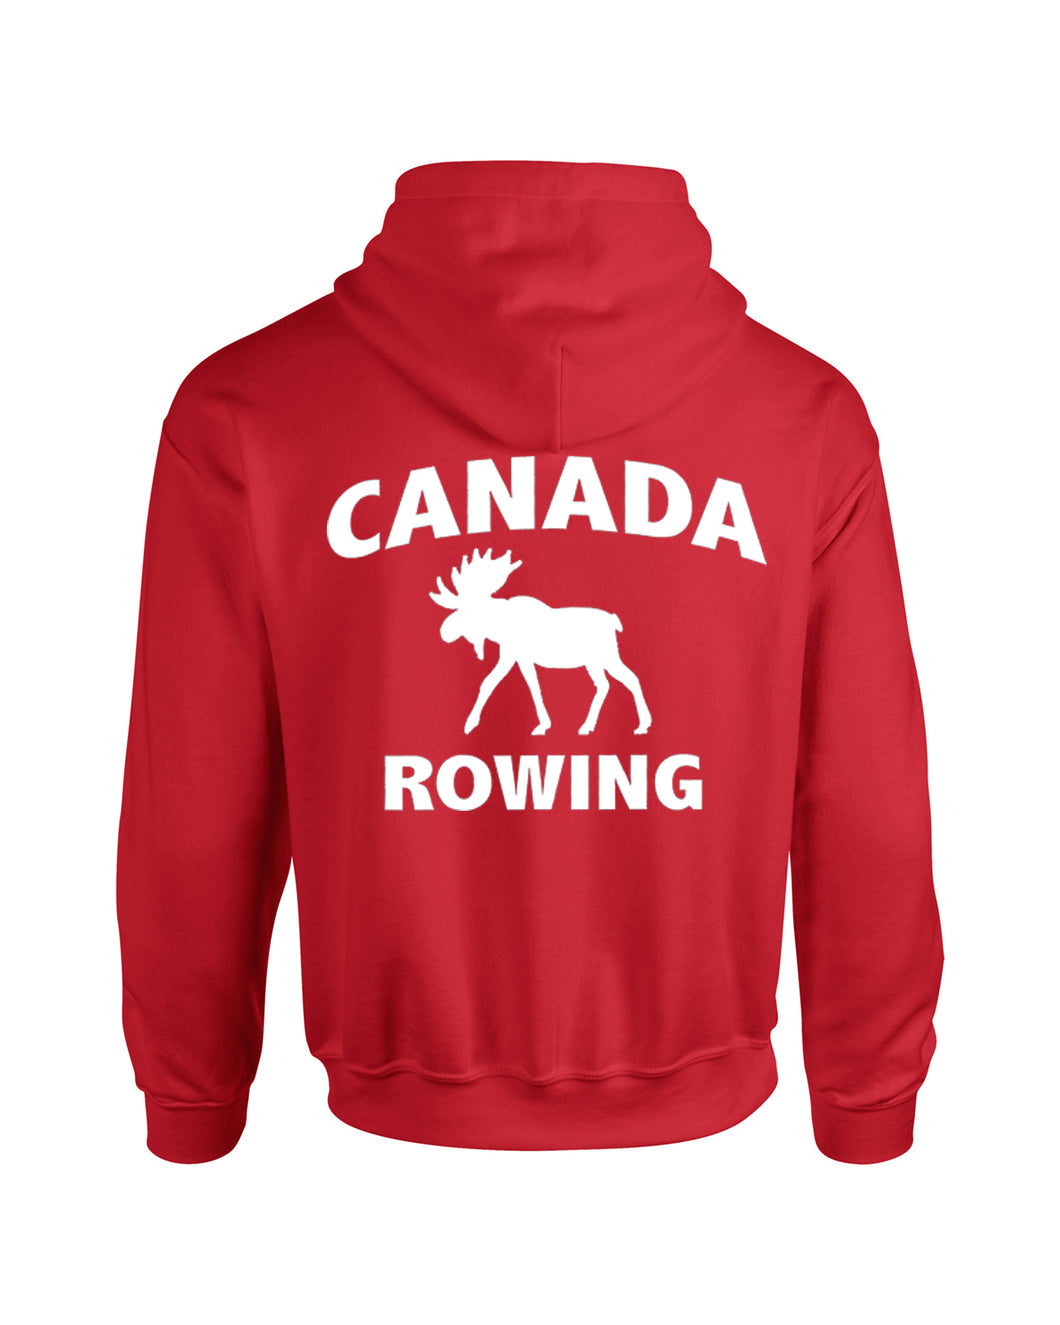 Canada Rowing Hoodie Red